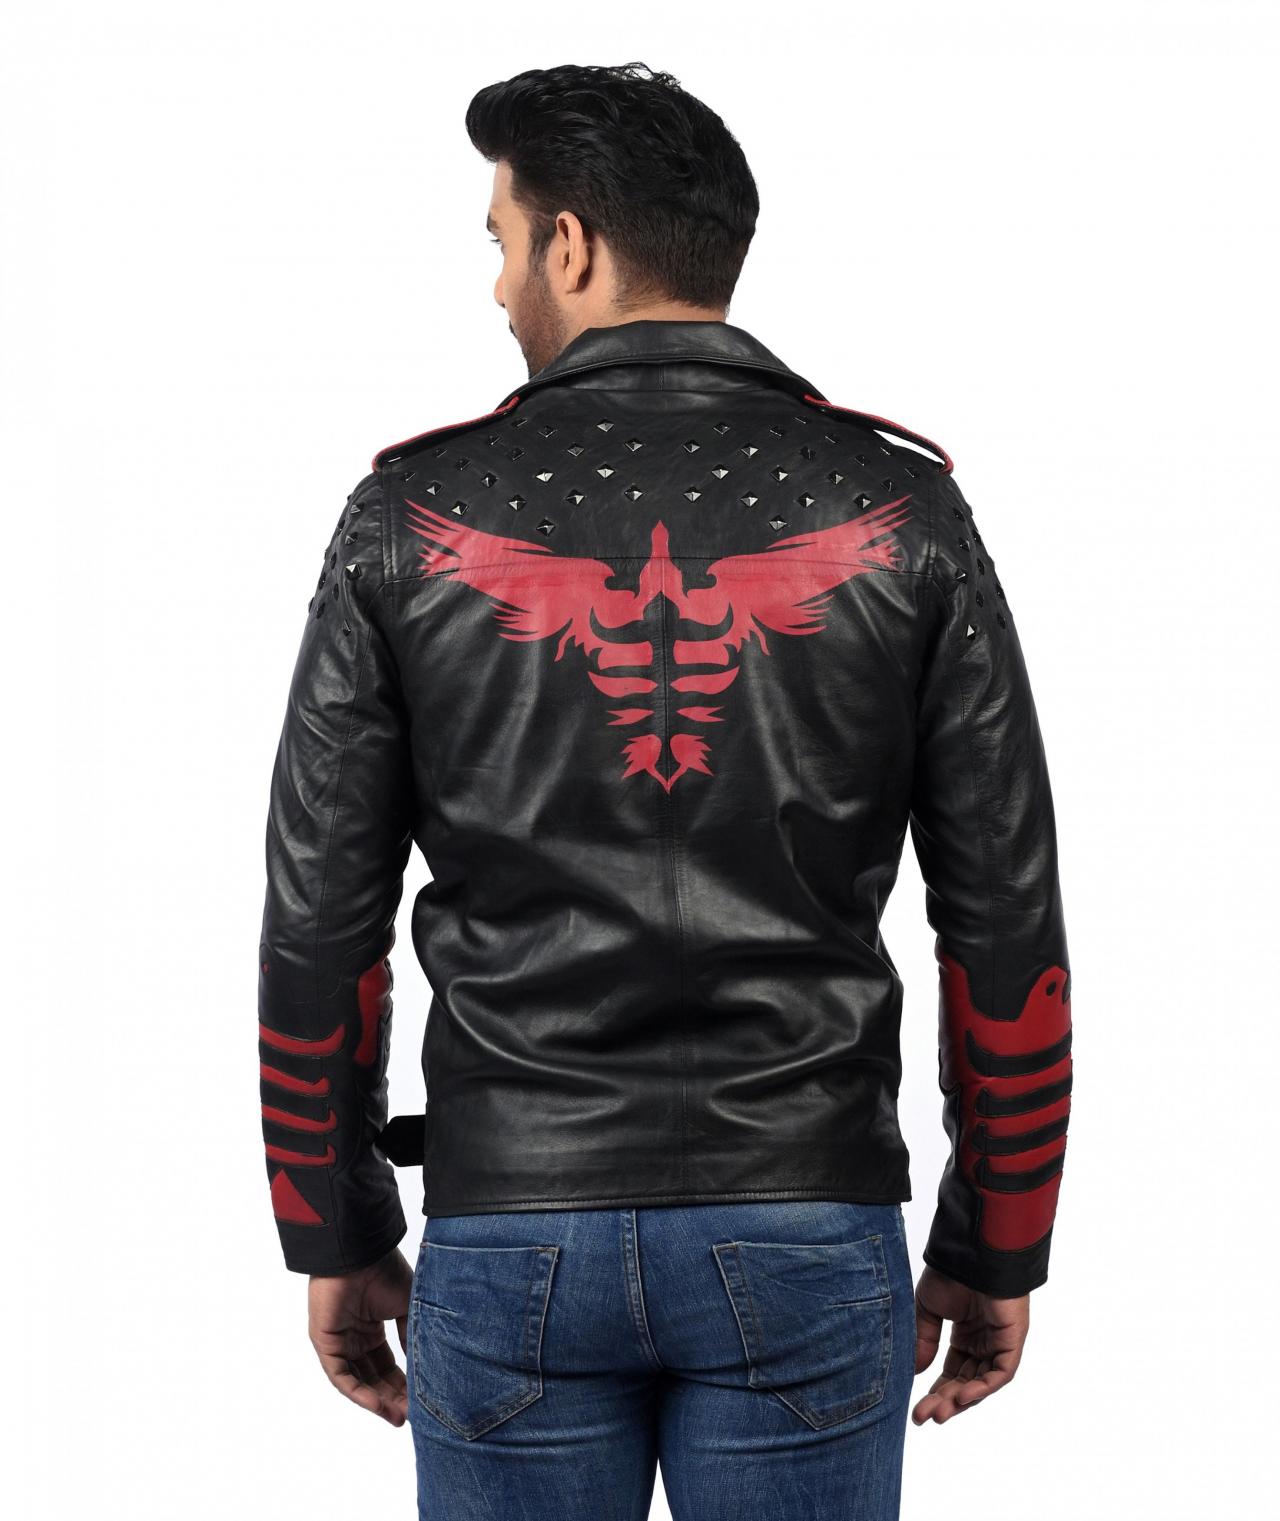 Men Fashion Unisex Blood Eagle Biker Black Rivet Motorcycle Leather Jacket Costume